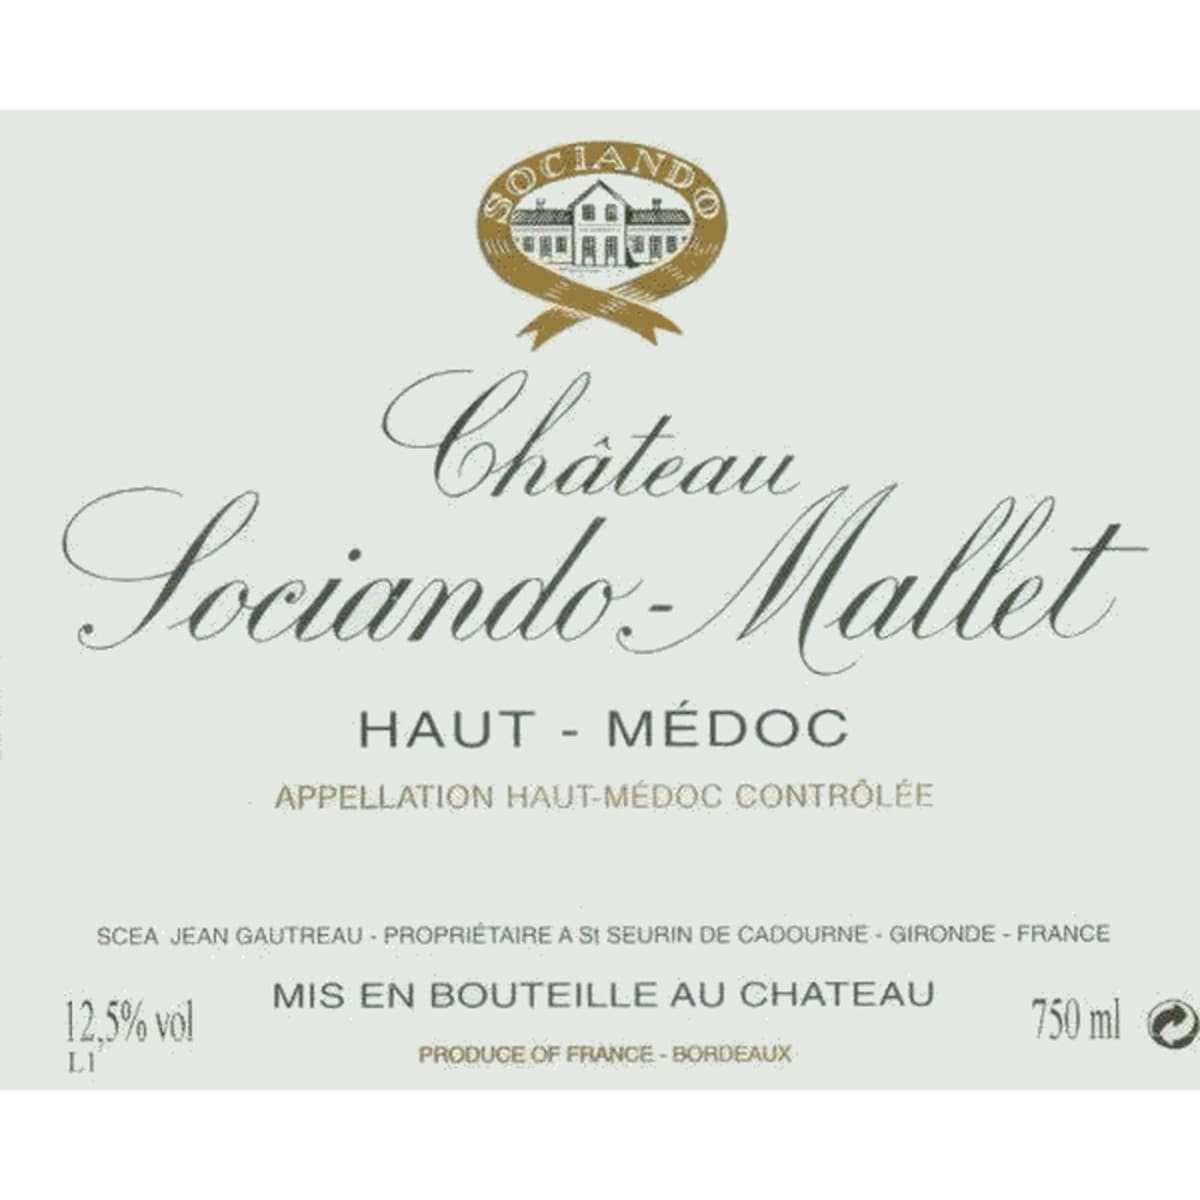 Chateau Sociando-Mallet  2010 Front Label